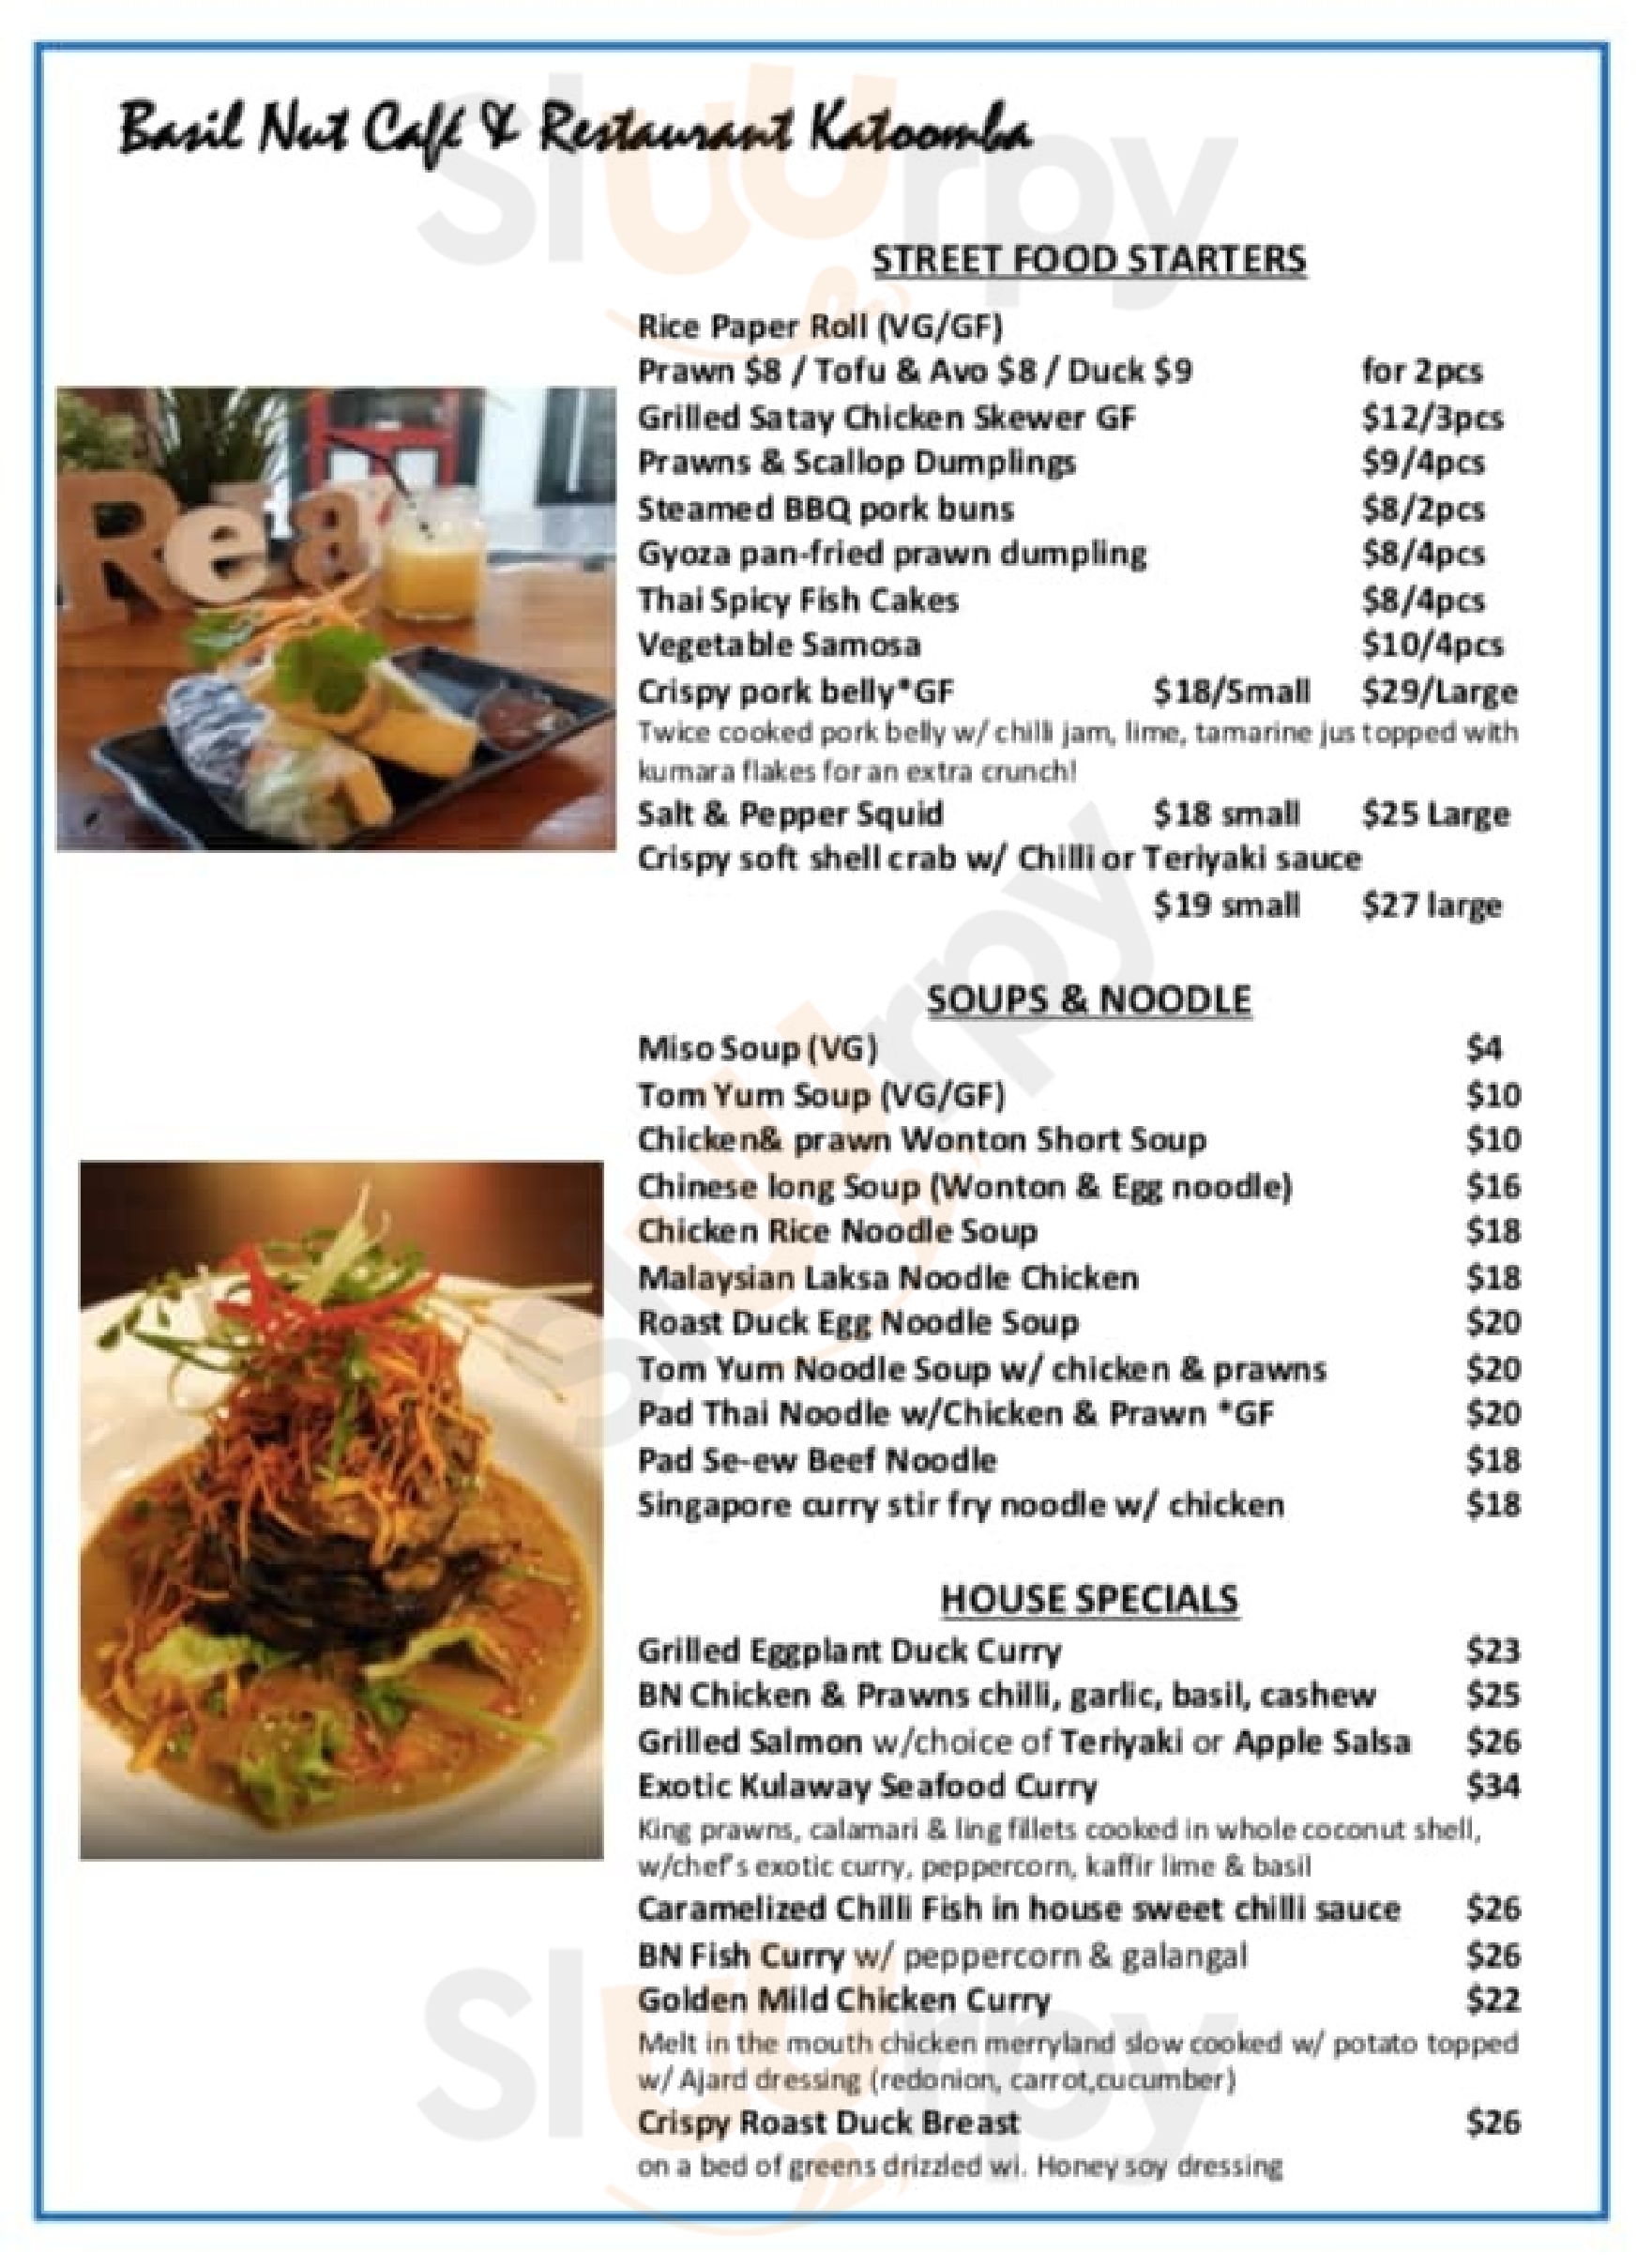 Basil Nut Cafe And Restaurant Katoomba Menu - 1